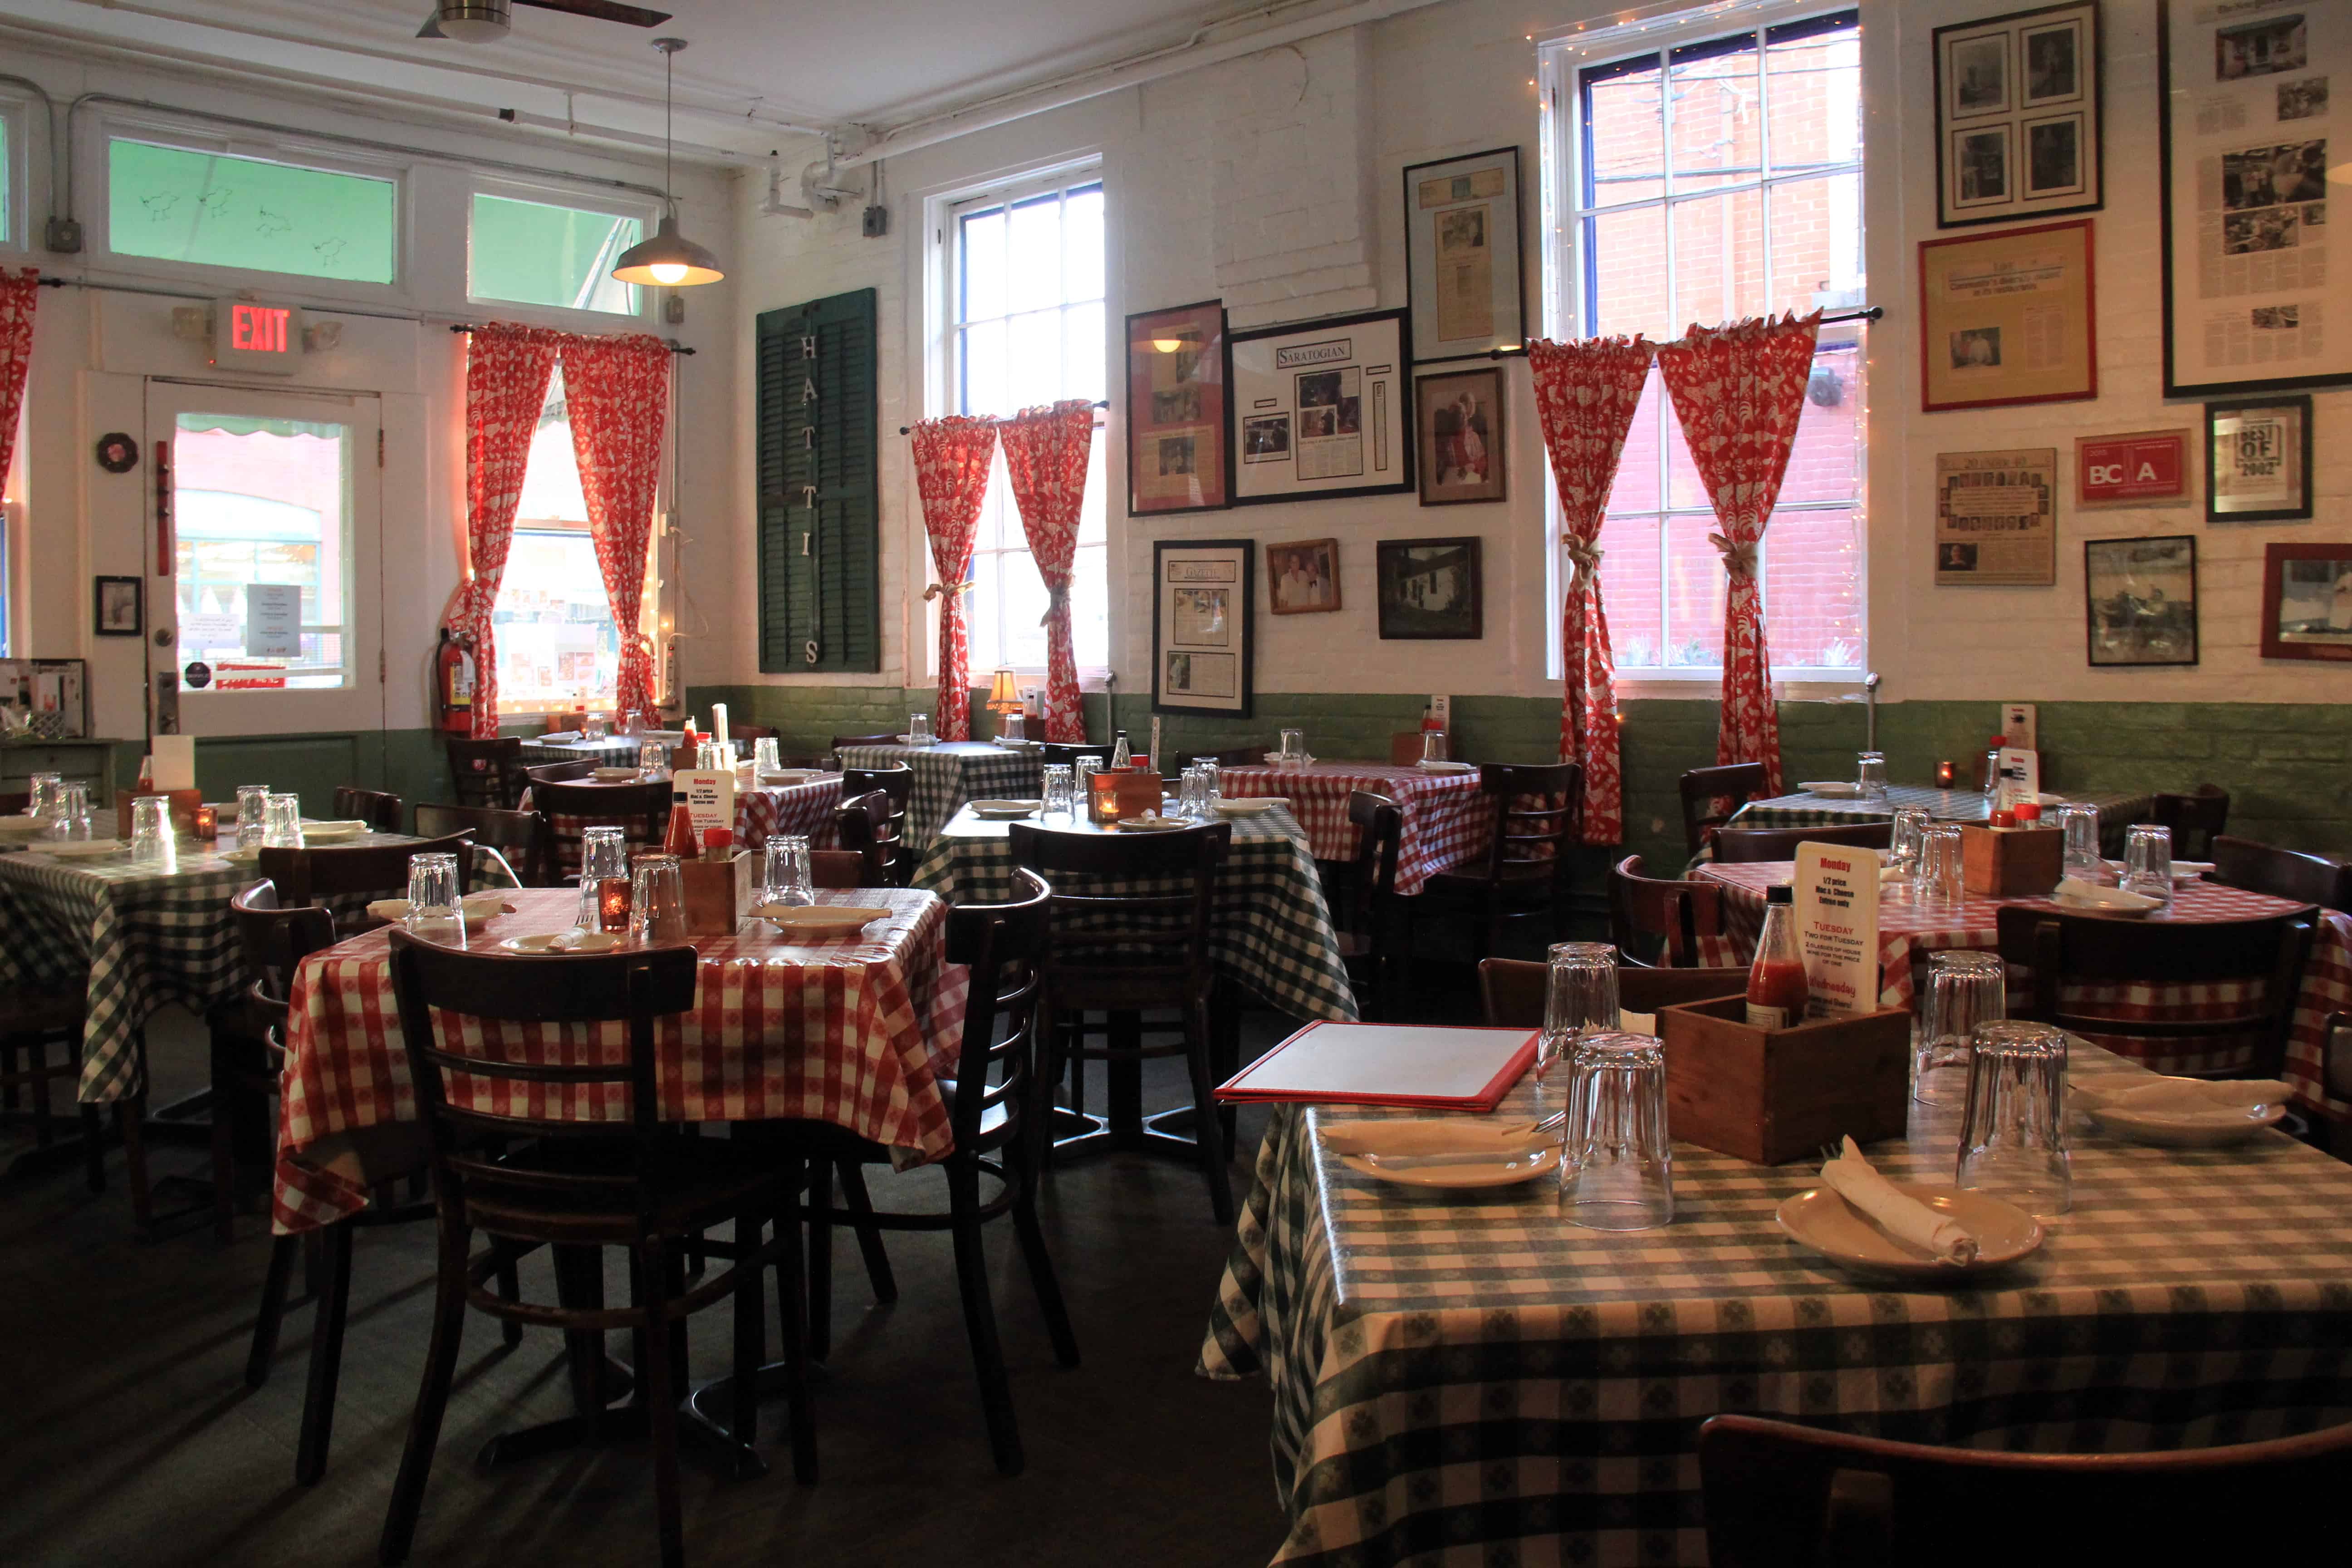 Checkered Tablecloths at Hattie's(c) Restaurant Phila Street